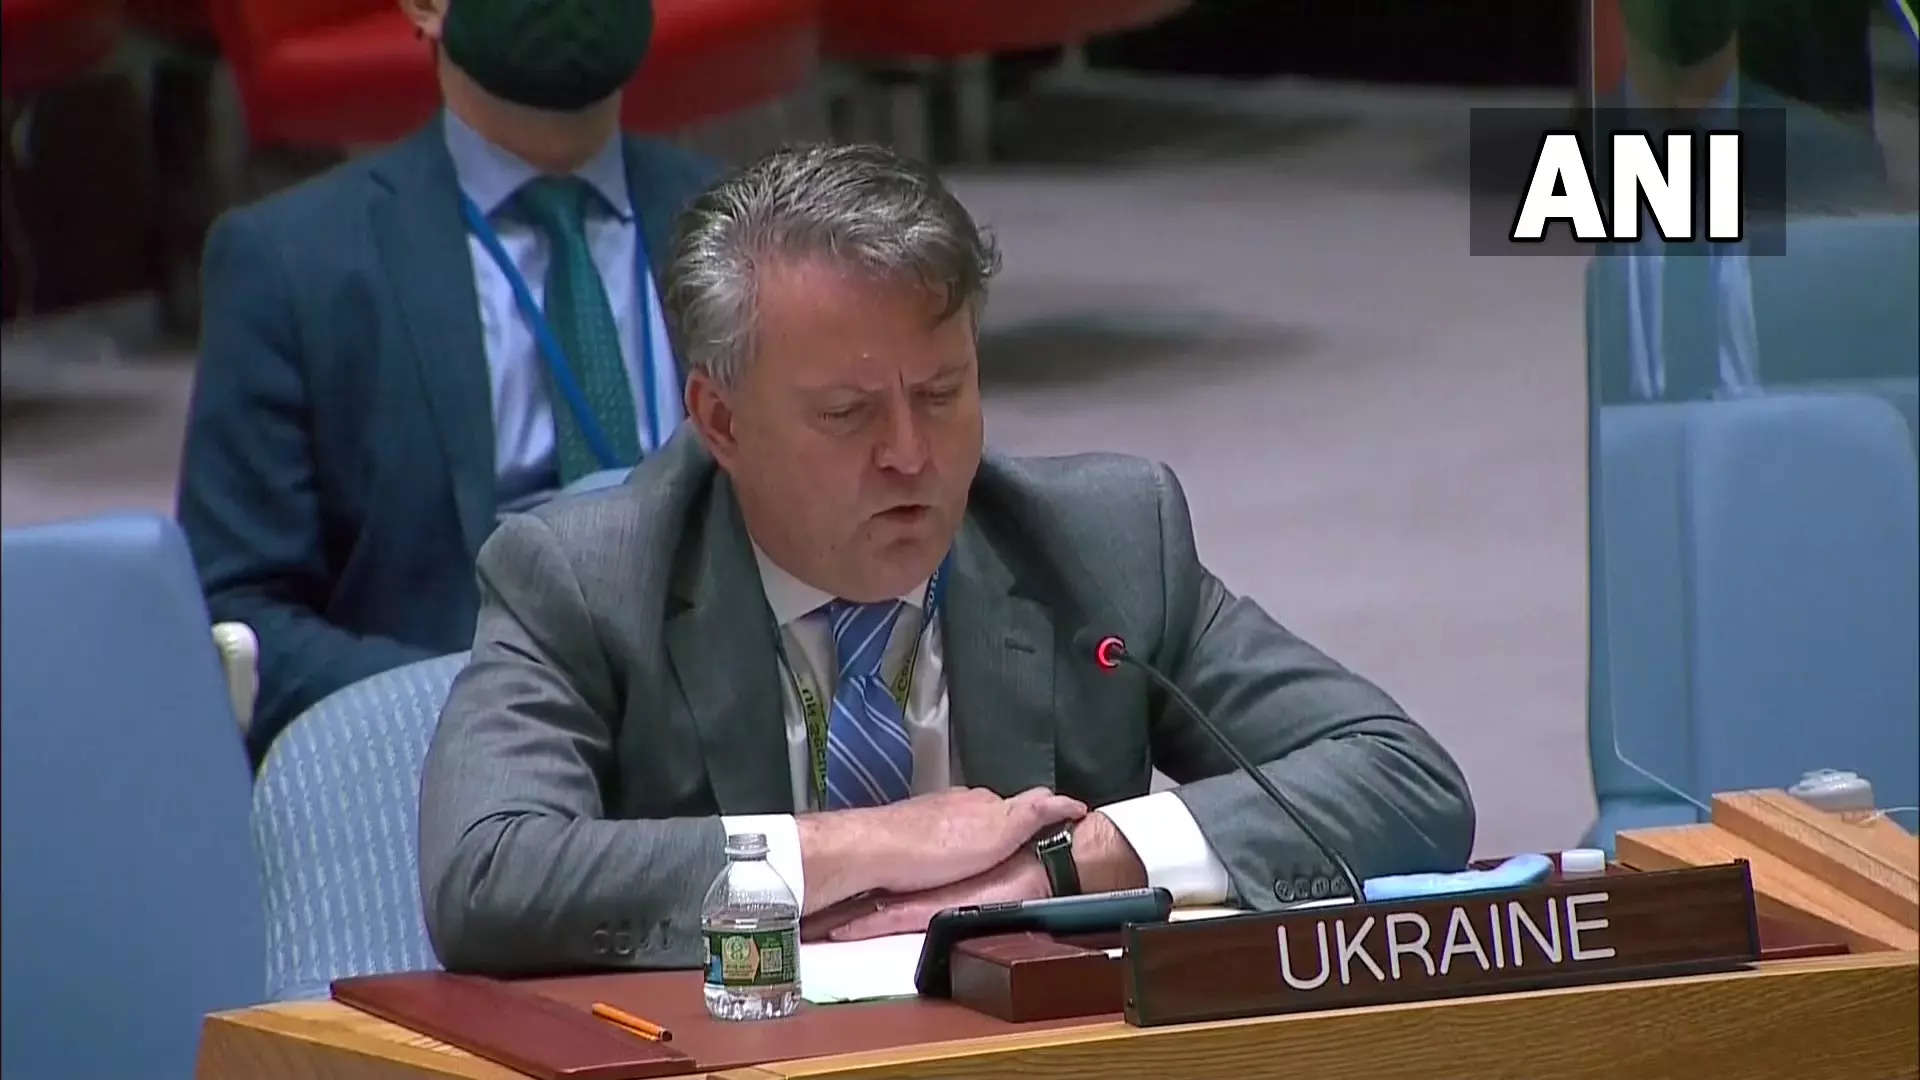 Ukrainian Ambassador to the UN Sergiy Kyslytsya